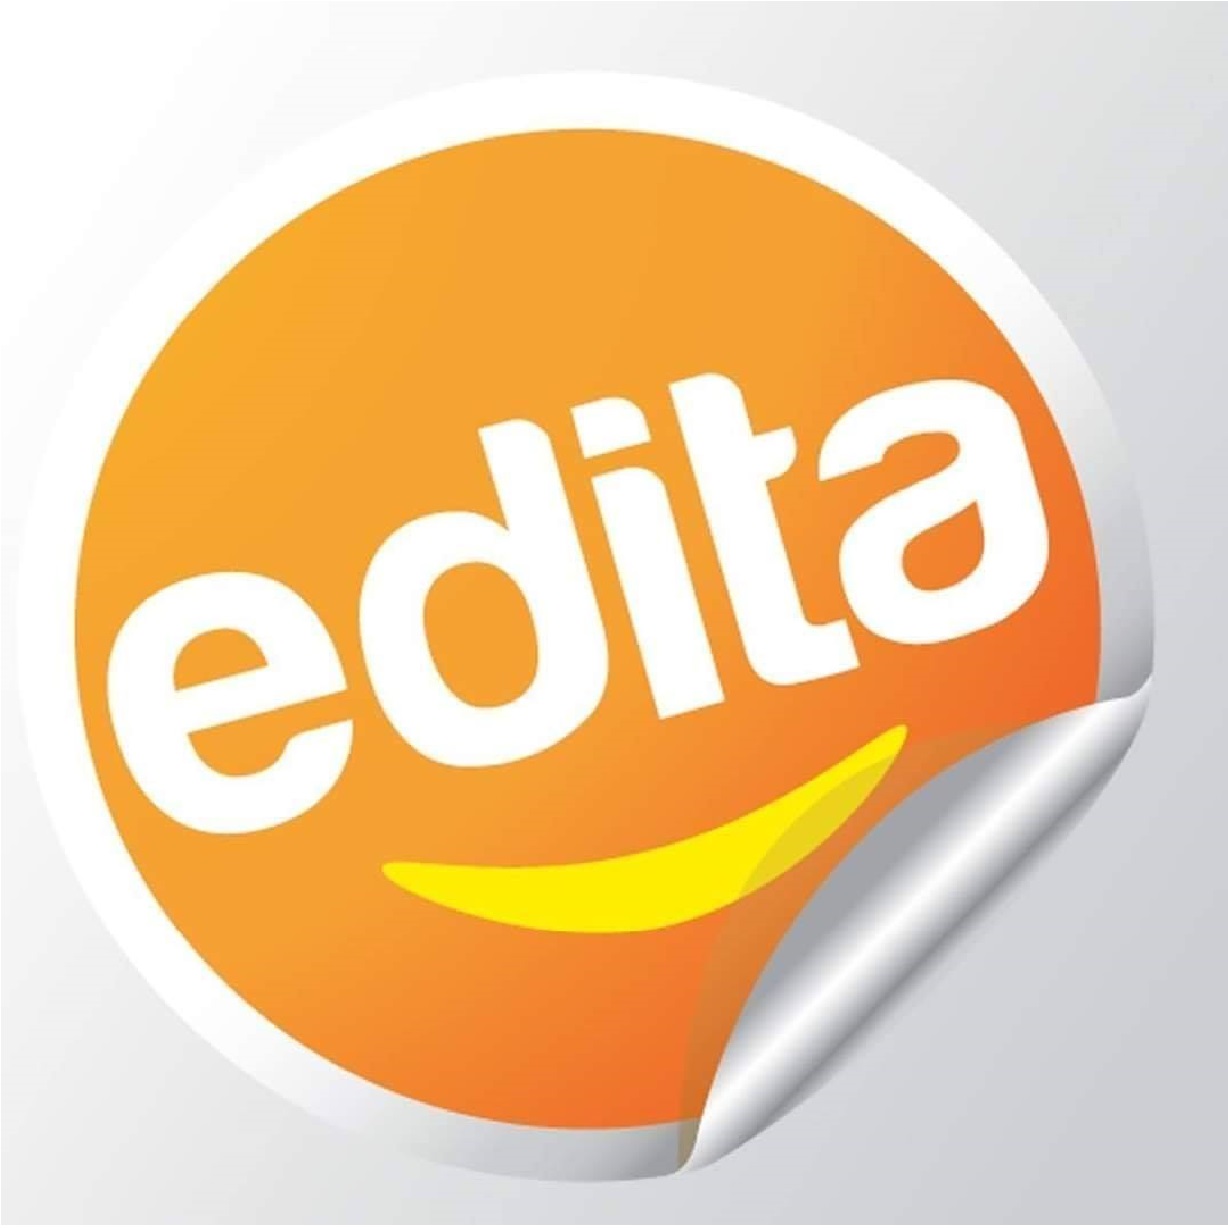 Edita Food Industries